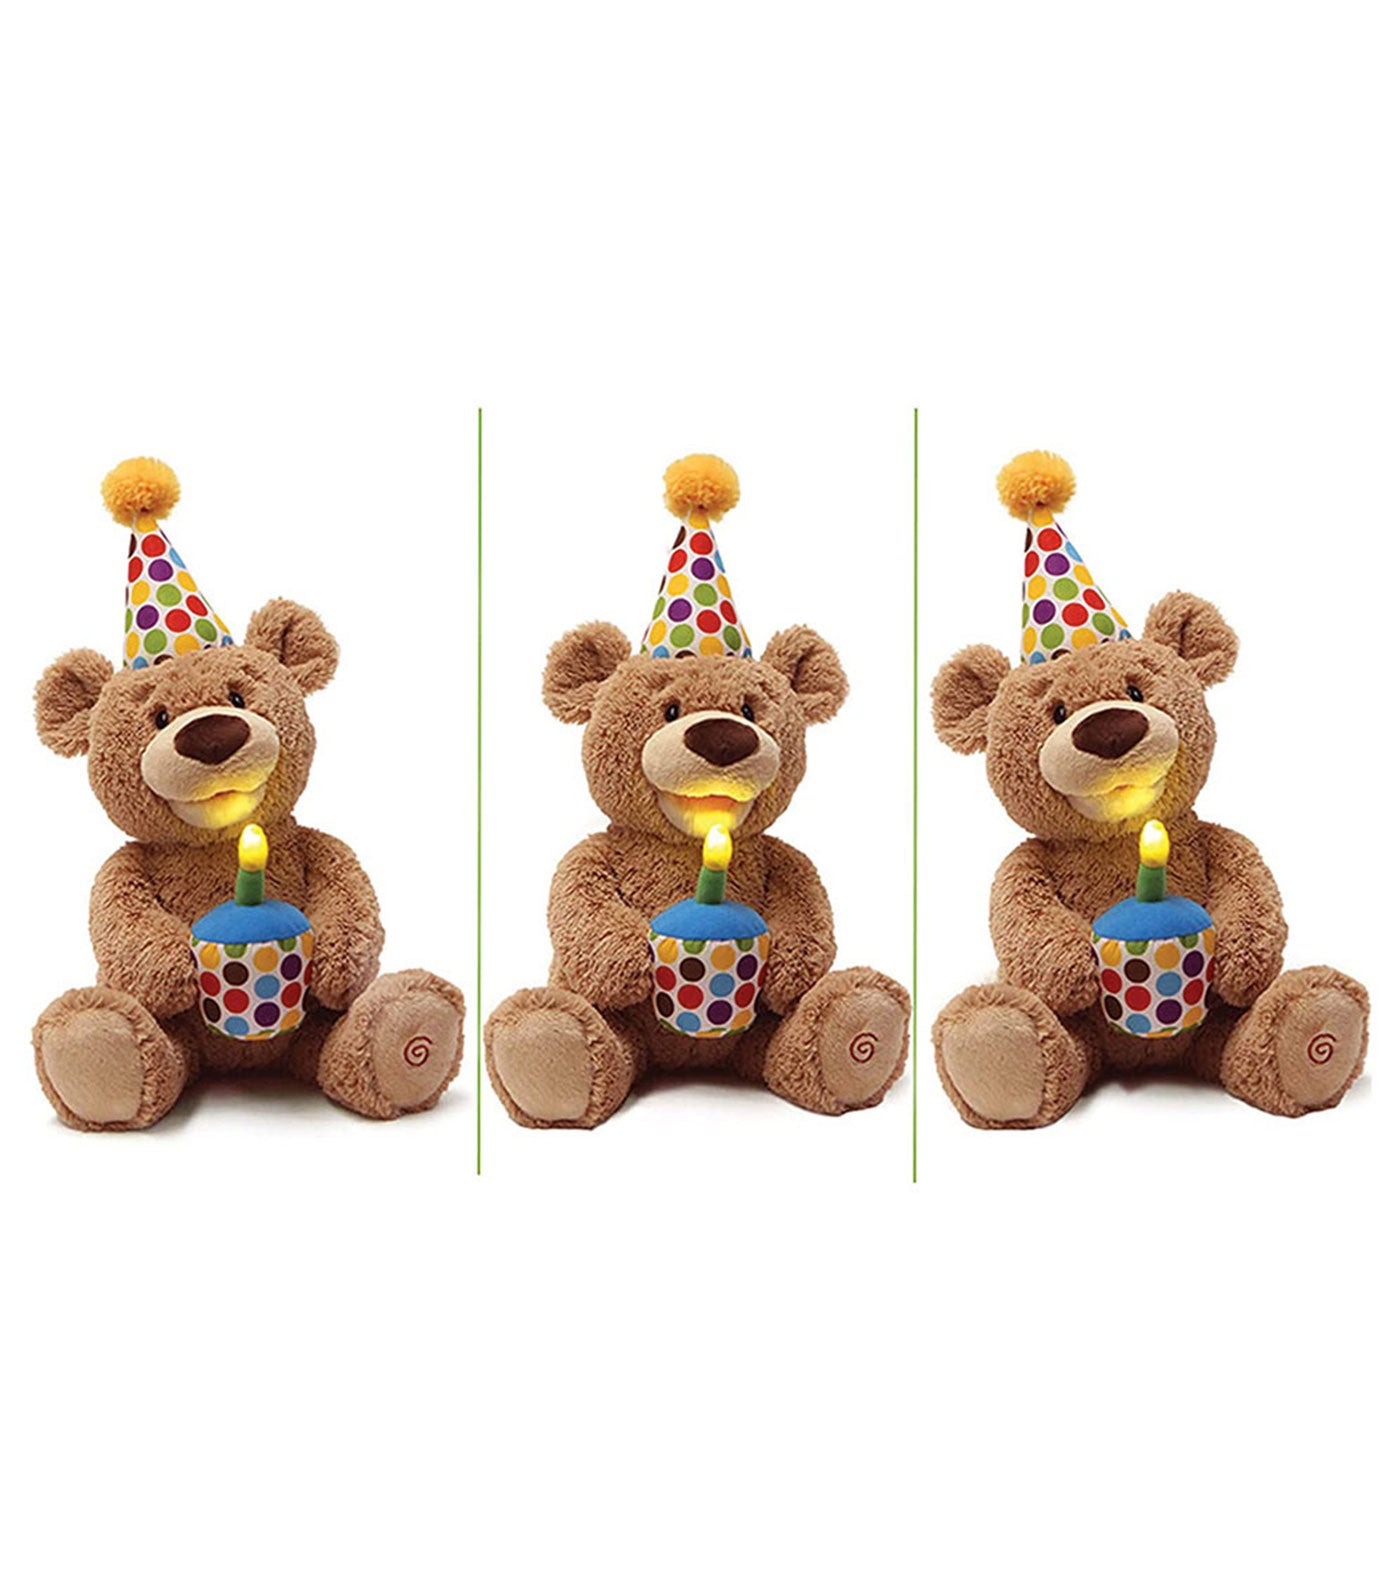 GUND Peek-a-Boo Bear Plush Animated Talking Teddy Bear Baby Gund